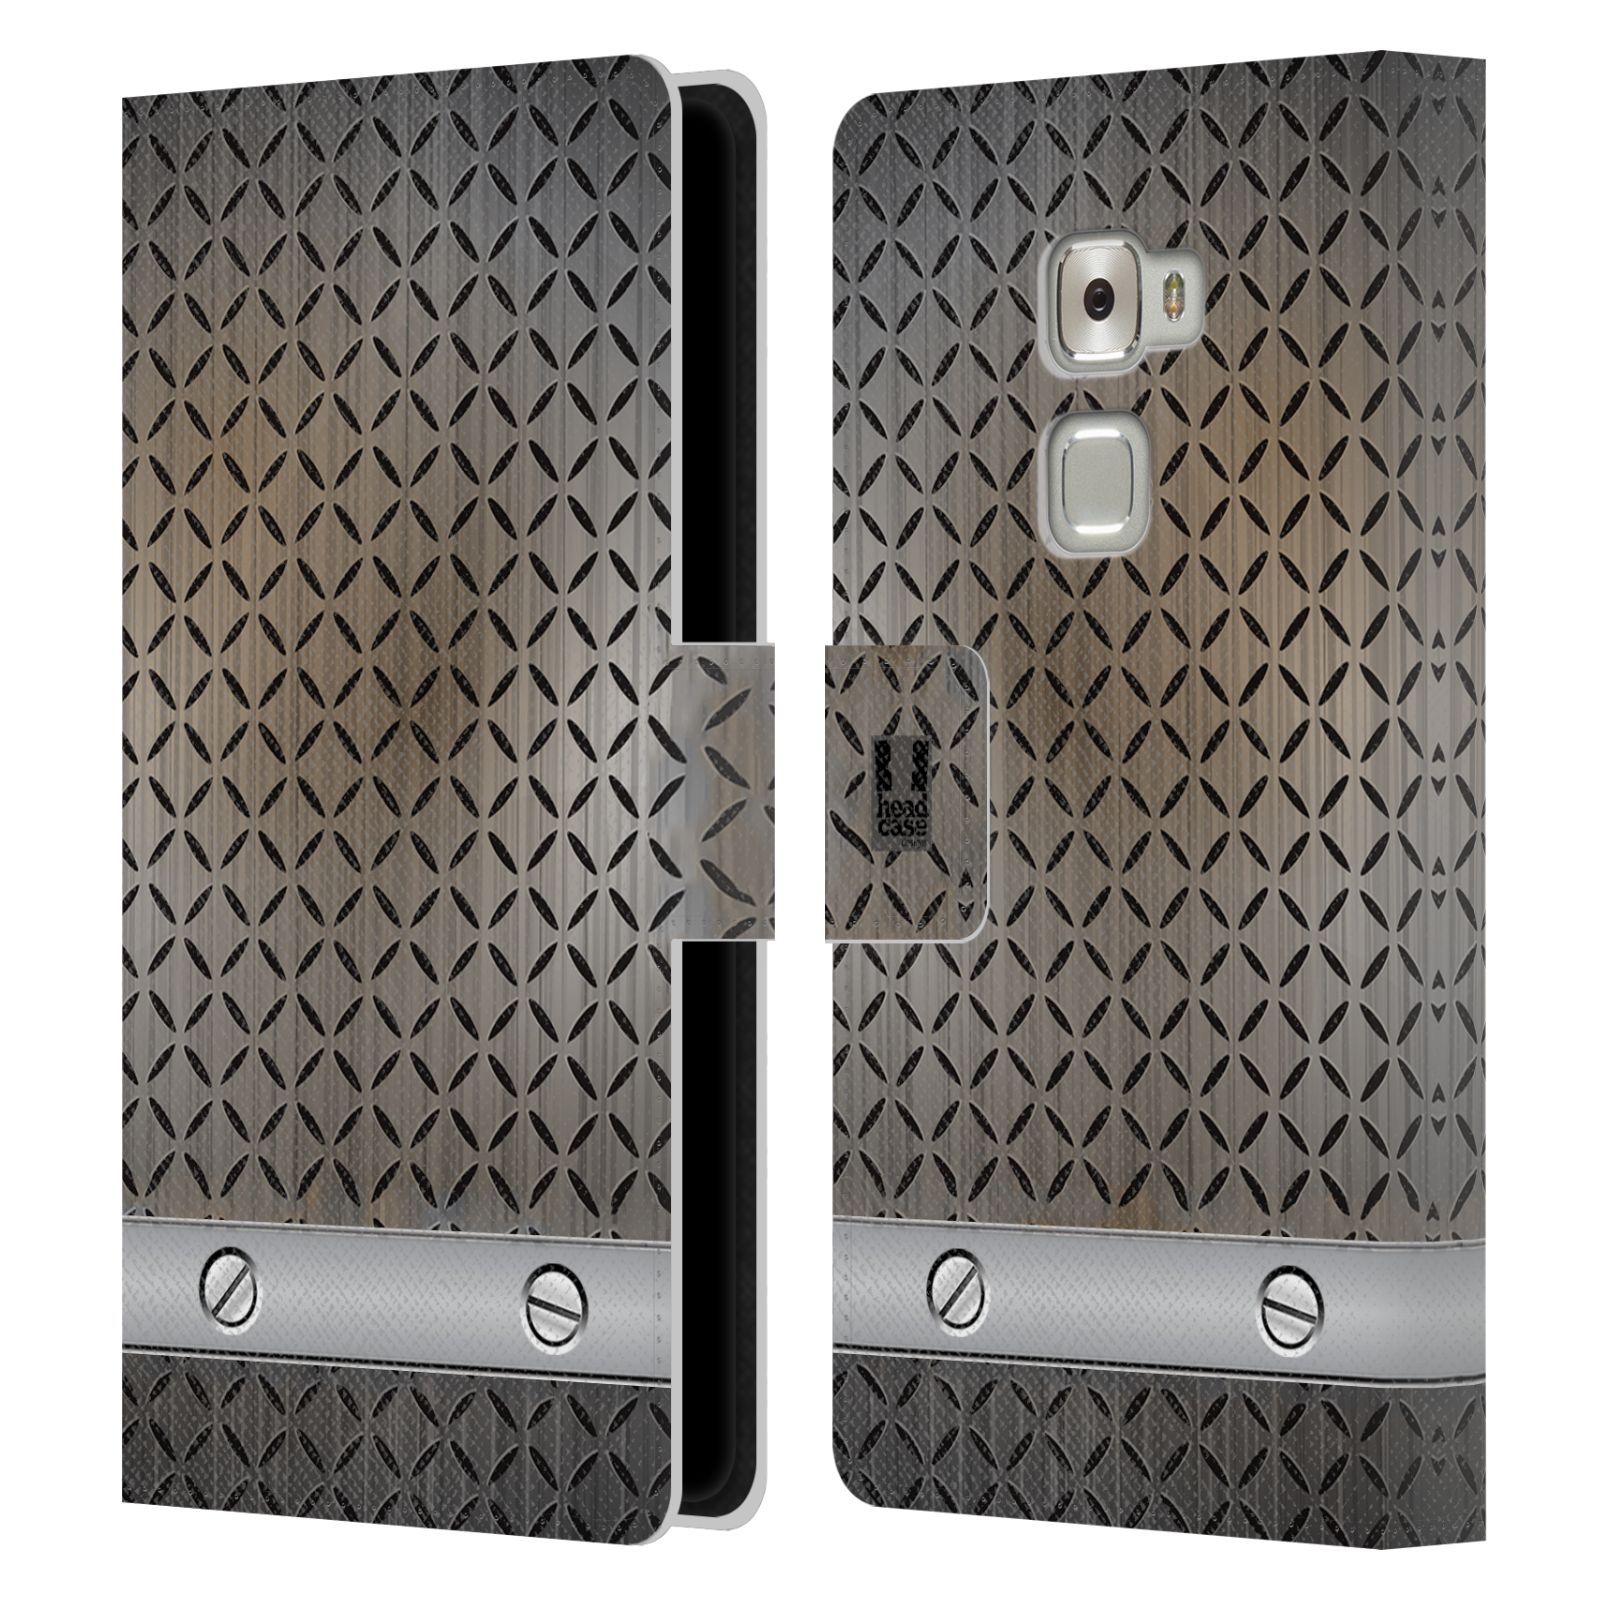 HEAD CASE Flipové pouzdro pro mobil Huawei MATE S stavební textury železo šedá barva